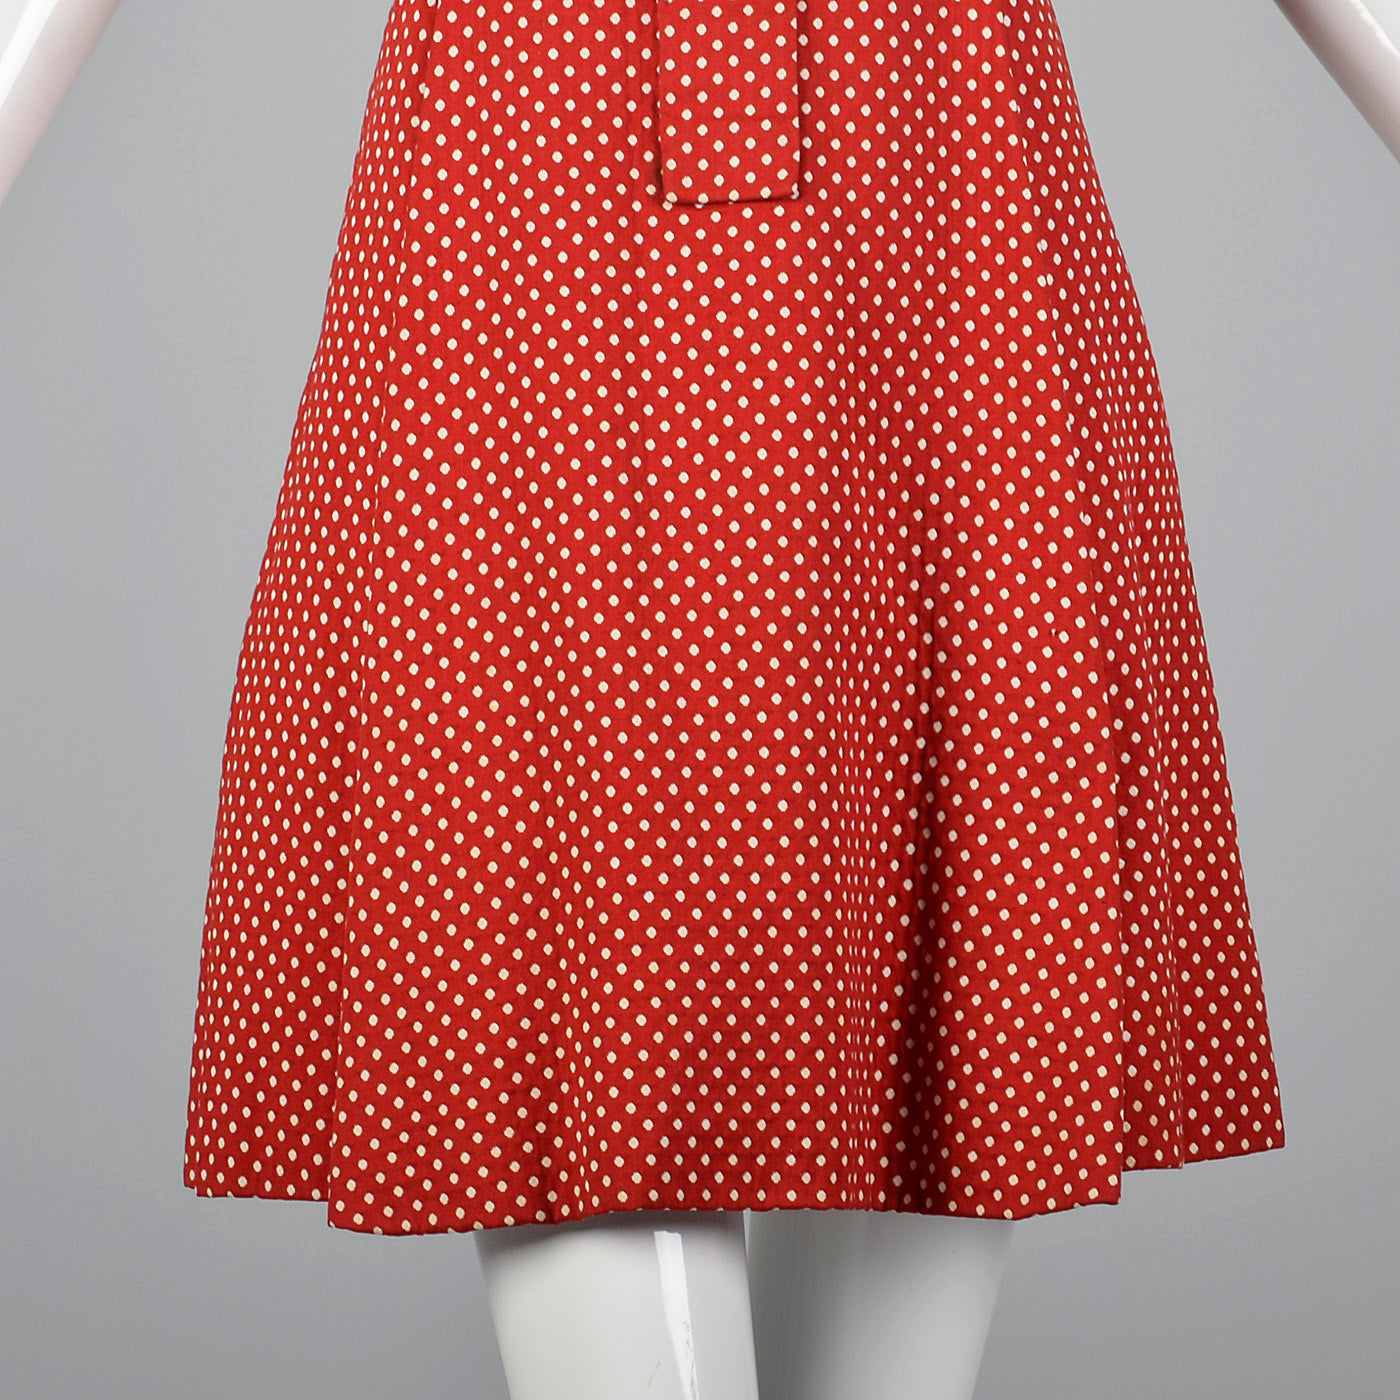 1960s Red Polka Dot Dress